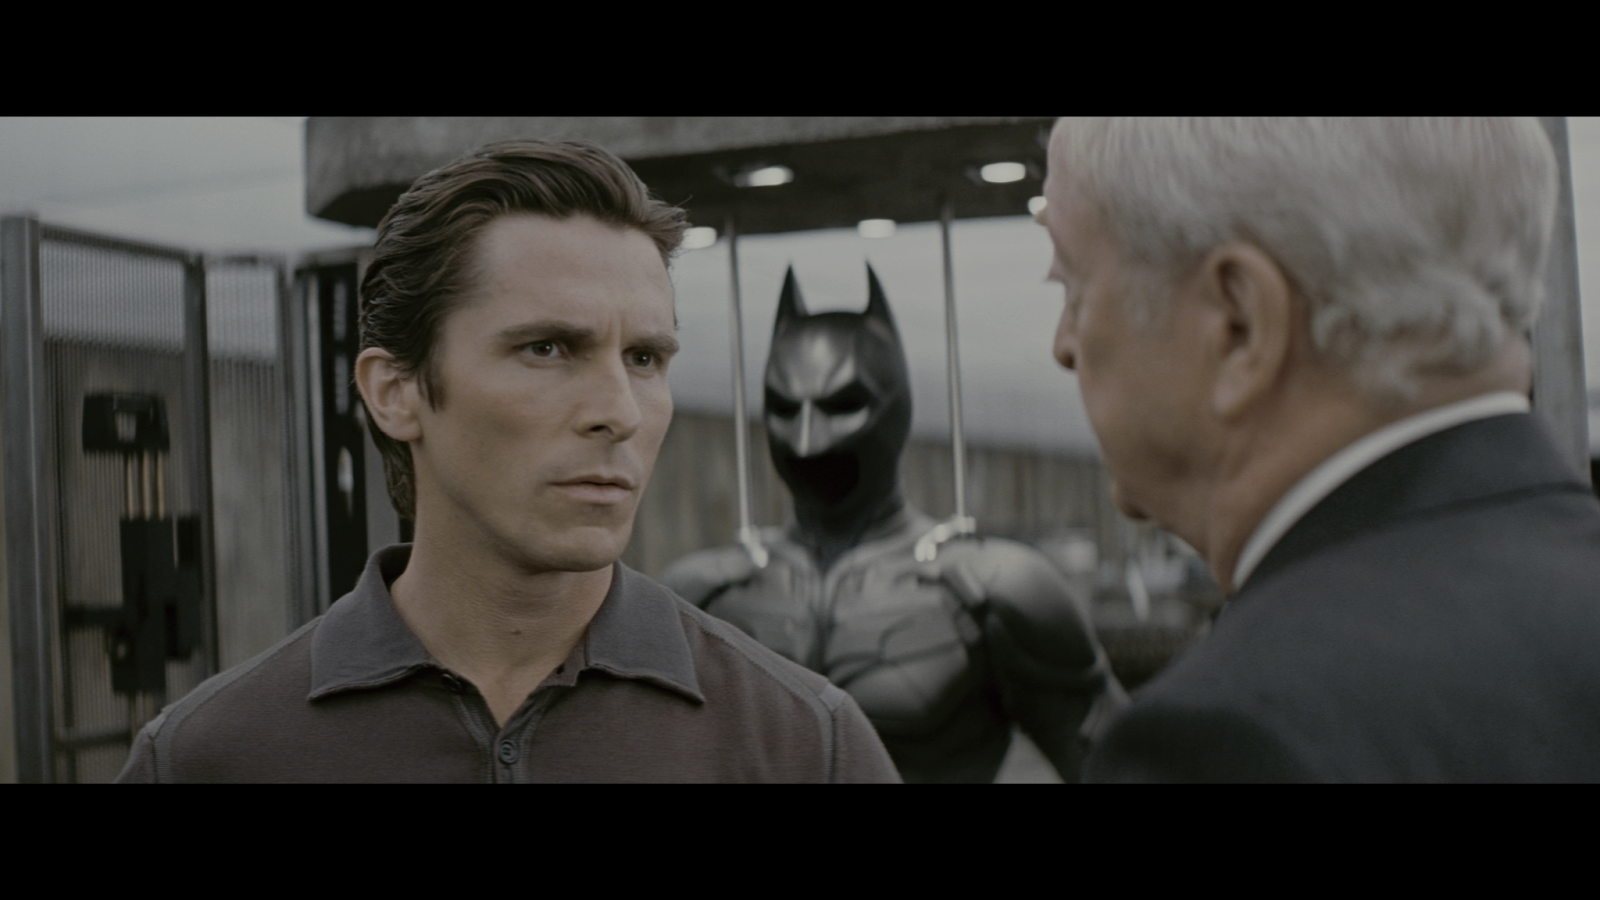  Batman El caballero de la noche (2008) IMAX 4K UHD HDR Latino